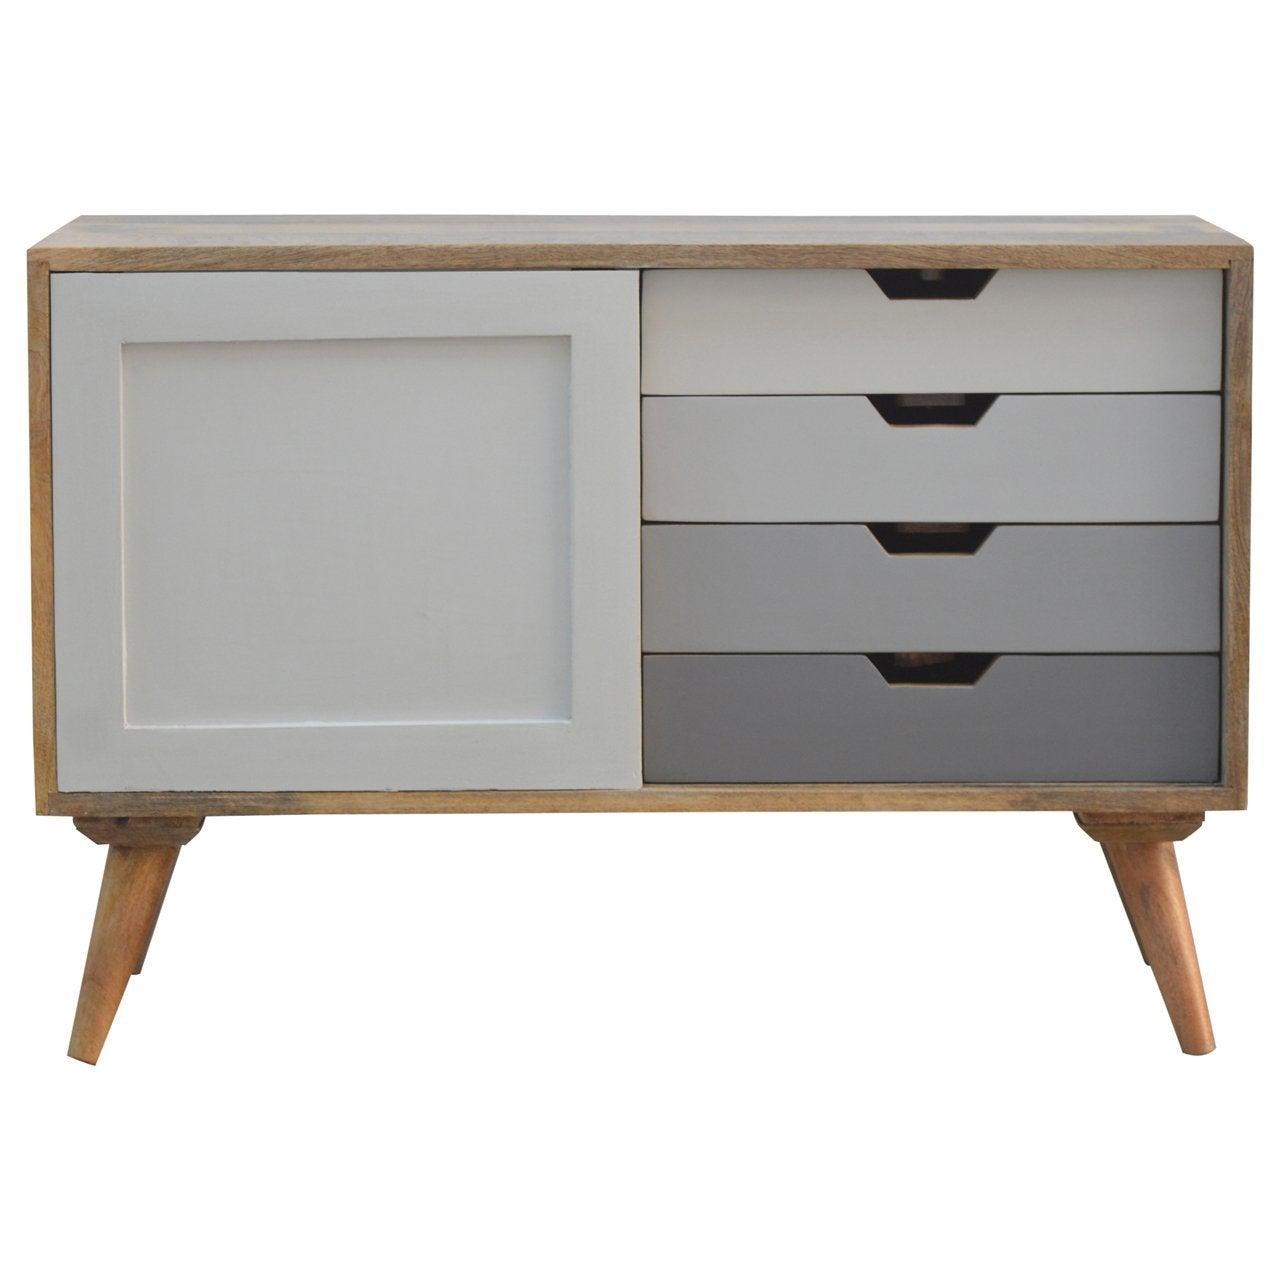 Nordic sliding cabinet with 4 drawers - crimblefest furniture - image 1